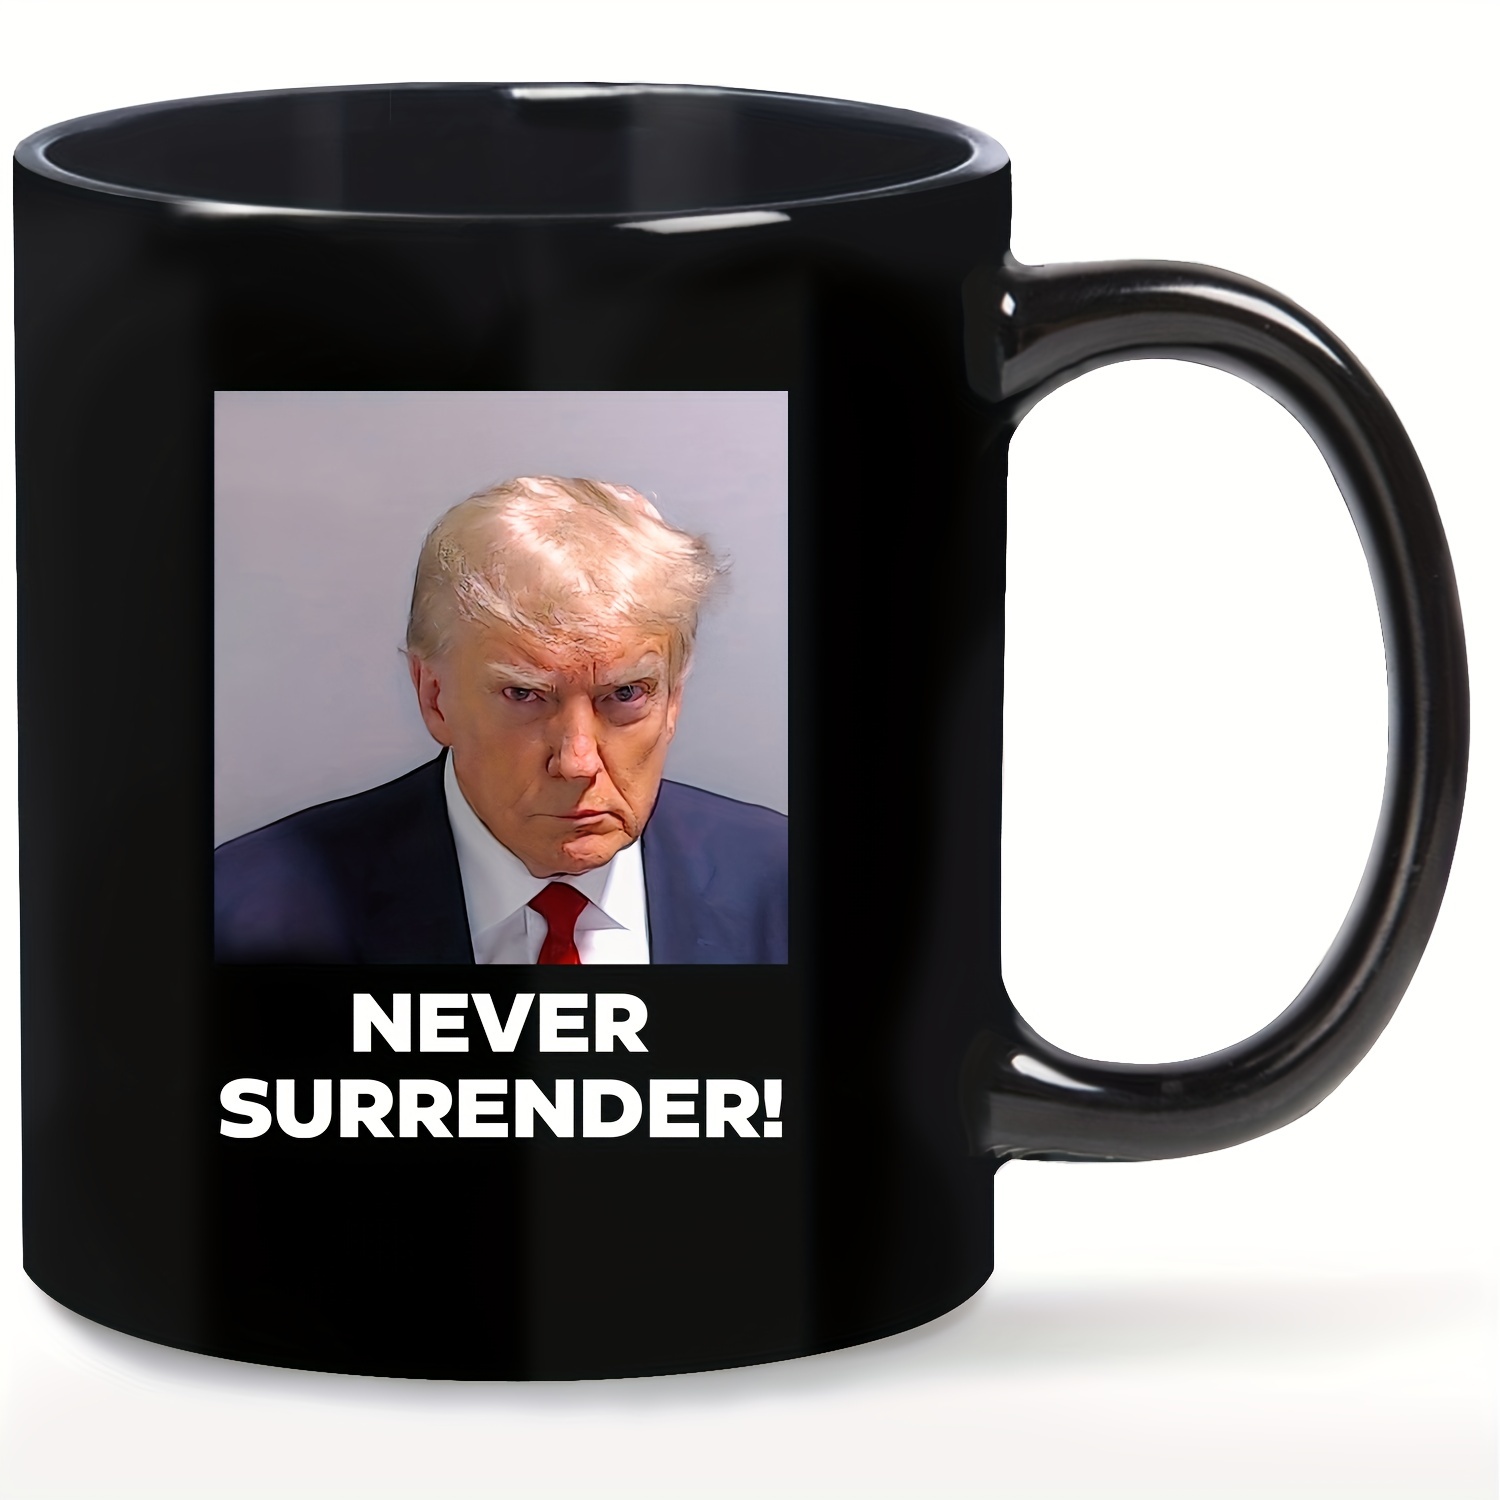 Donald Trump Mug Shot 10oz Mug Cup Funny Jail Lock Him Up